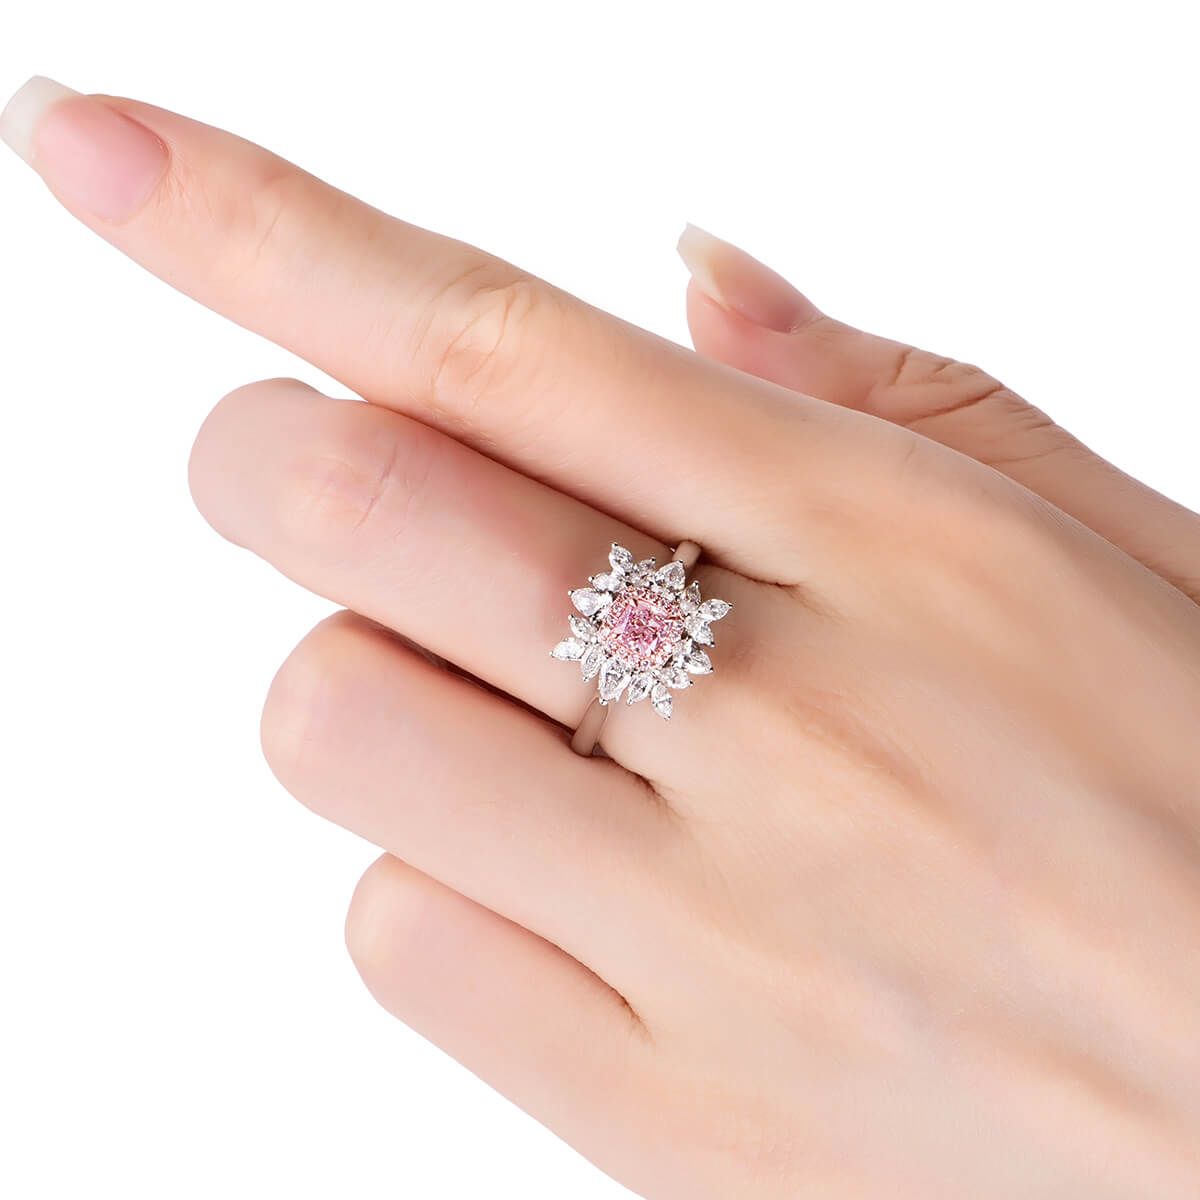 Very Light Pink Diamond Ring, 0.37 Ct. (1.28 Ct. TW), Cushion shape, GIA Certified, 2193259204